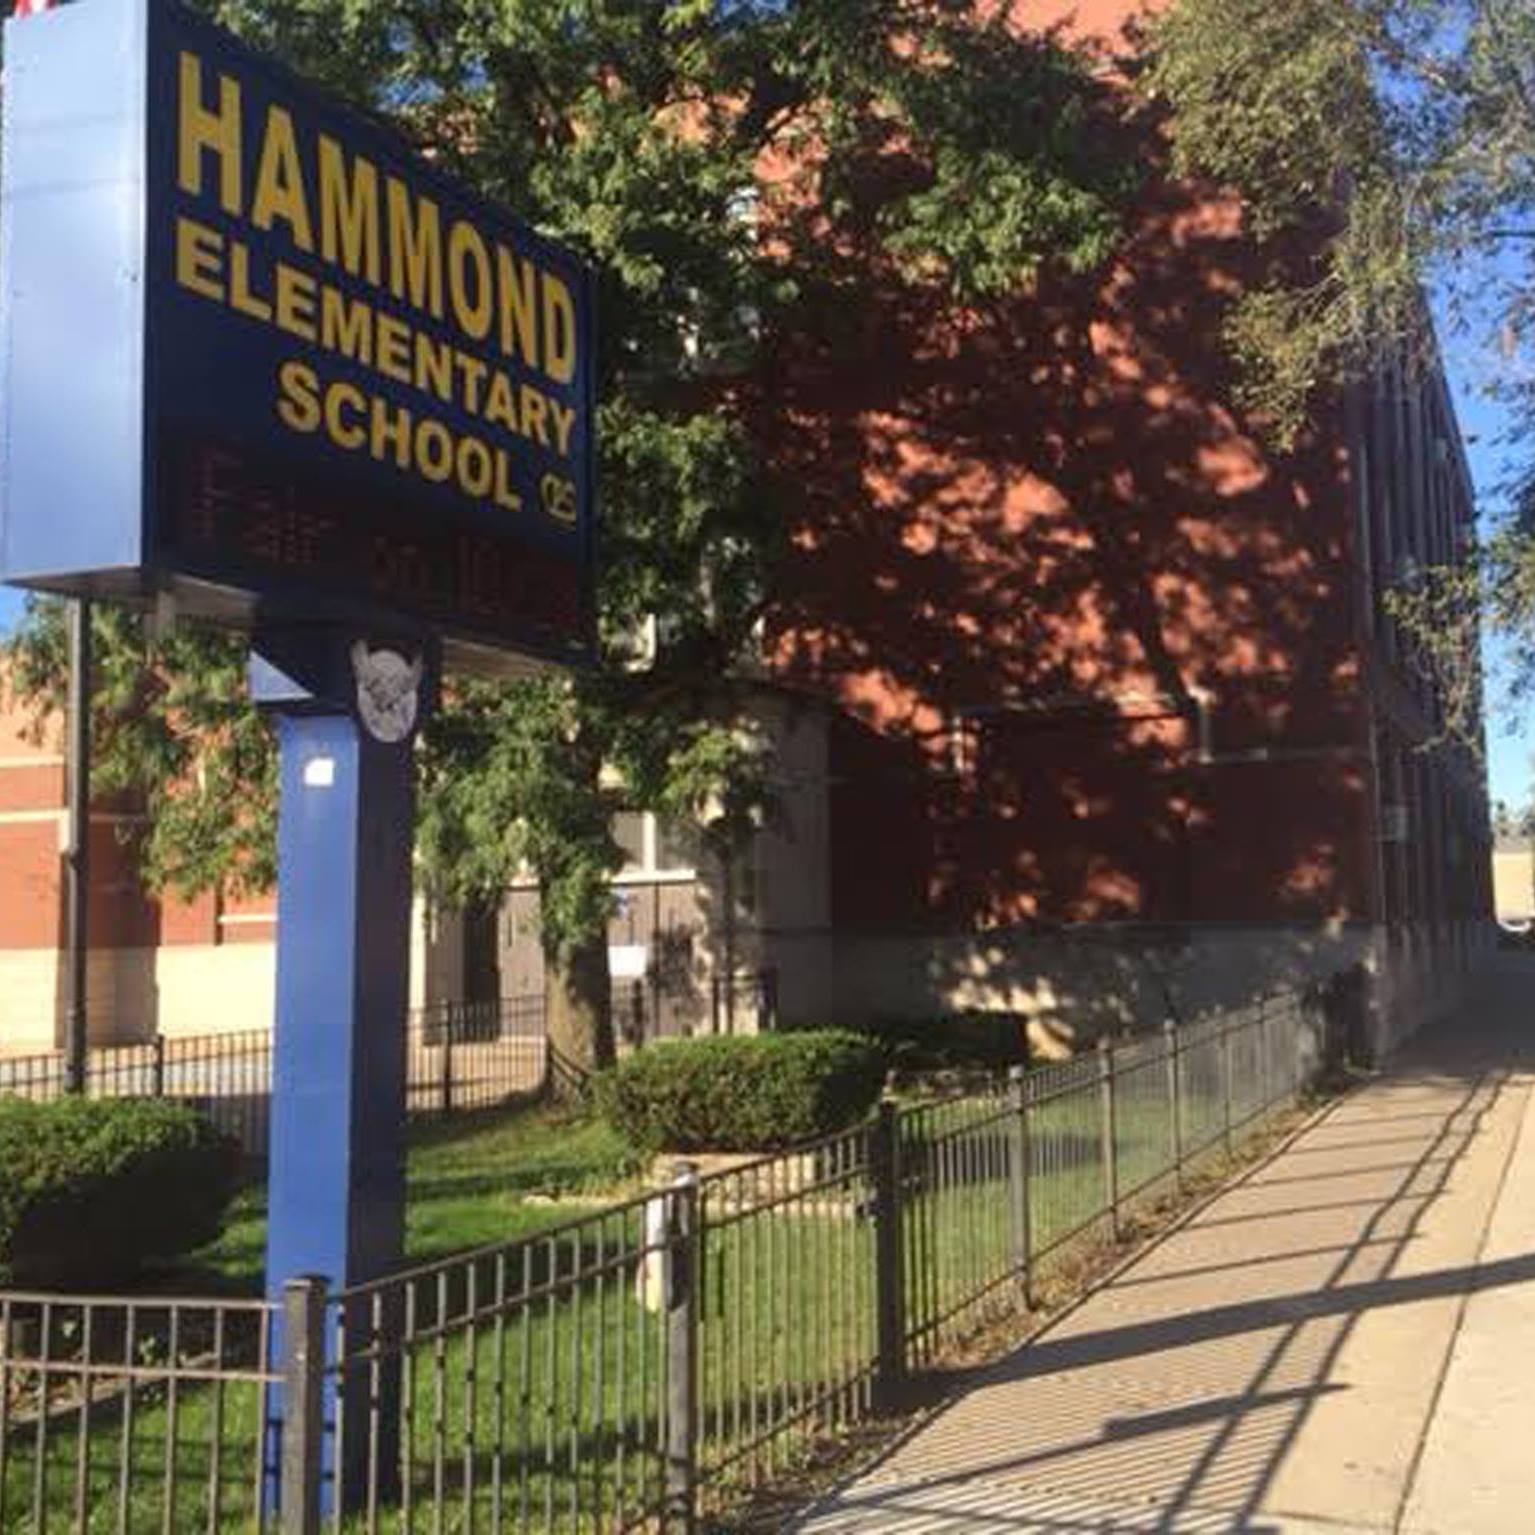 Hammond Elementary School